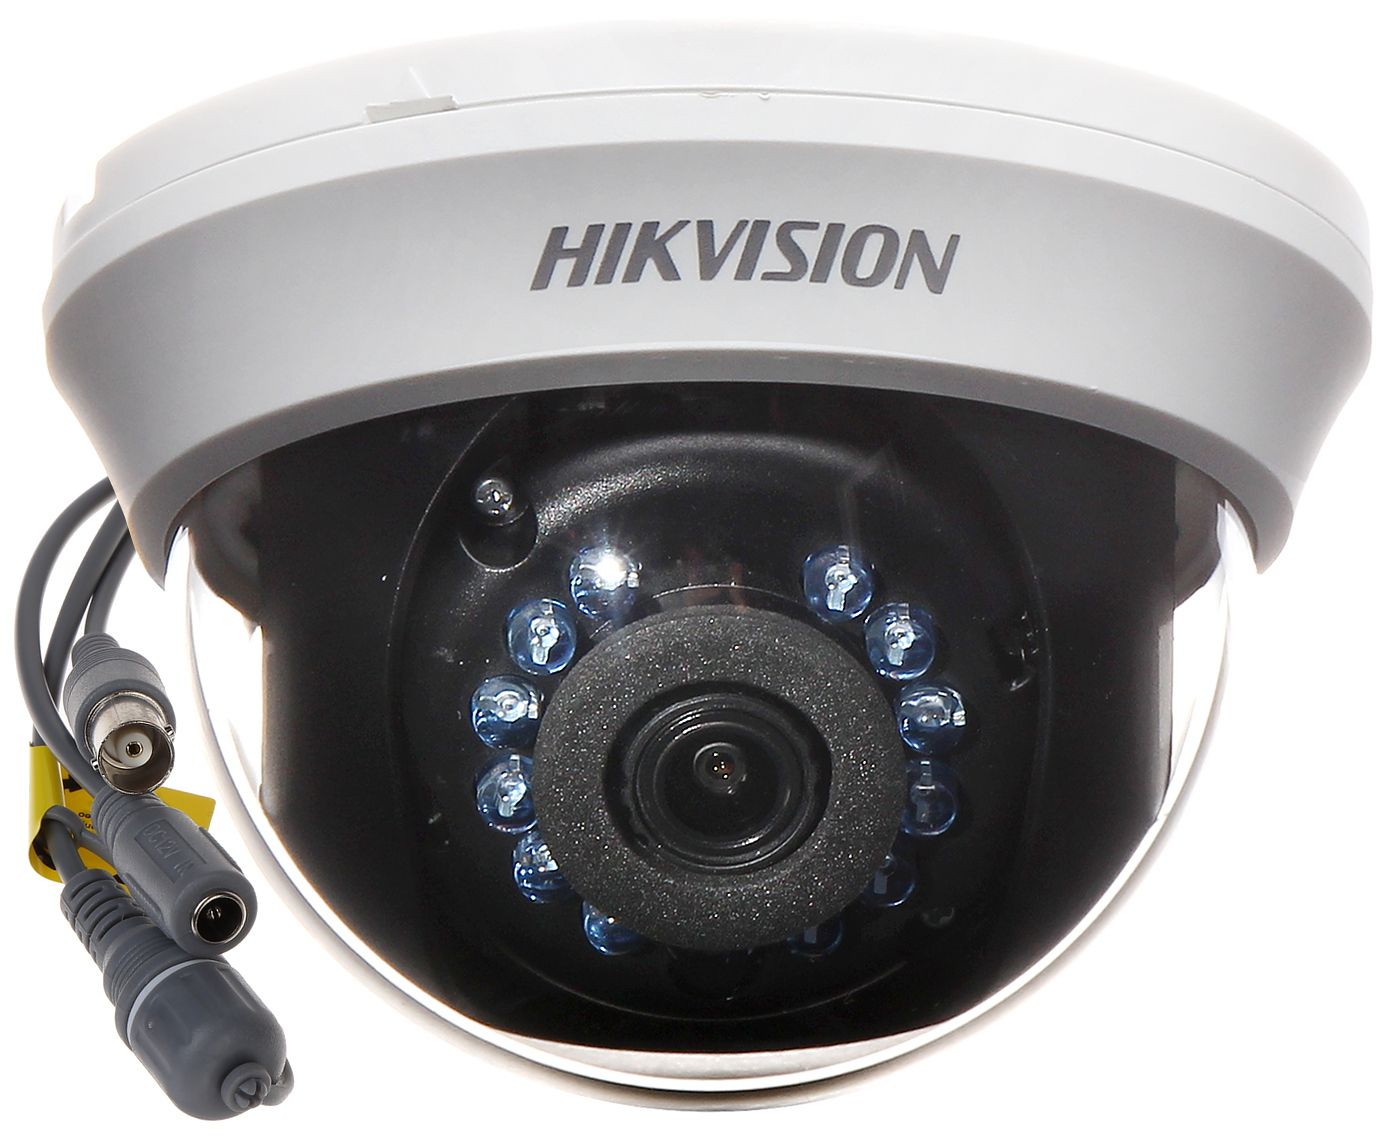 Hikvision DS-2CE56D0T-IRMMF (2.8 мм) 2 Мп Turbo HD видеокамера